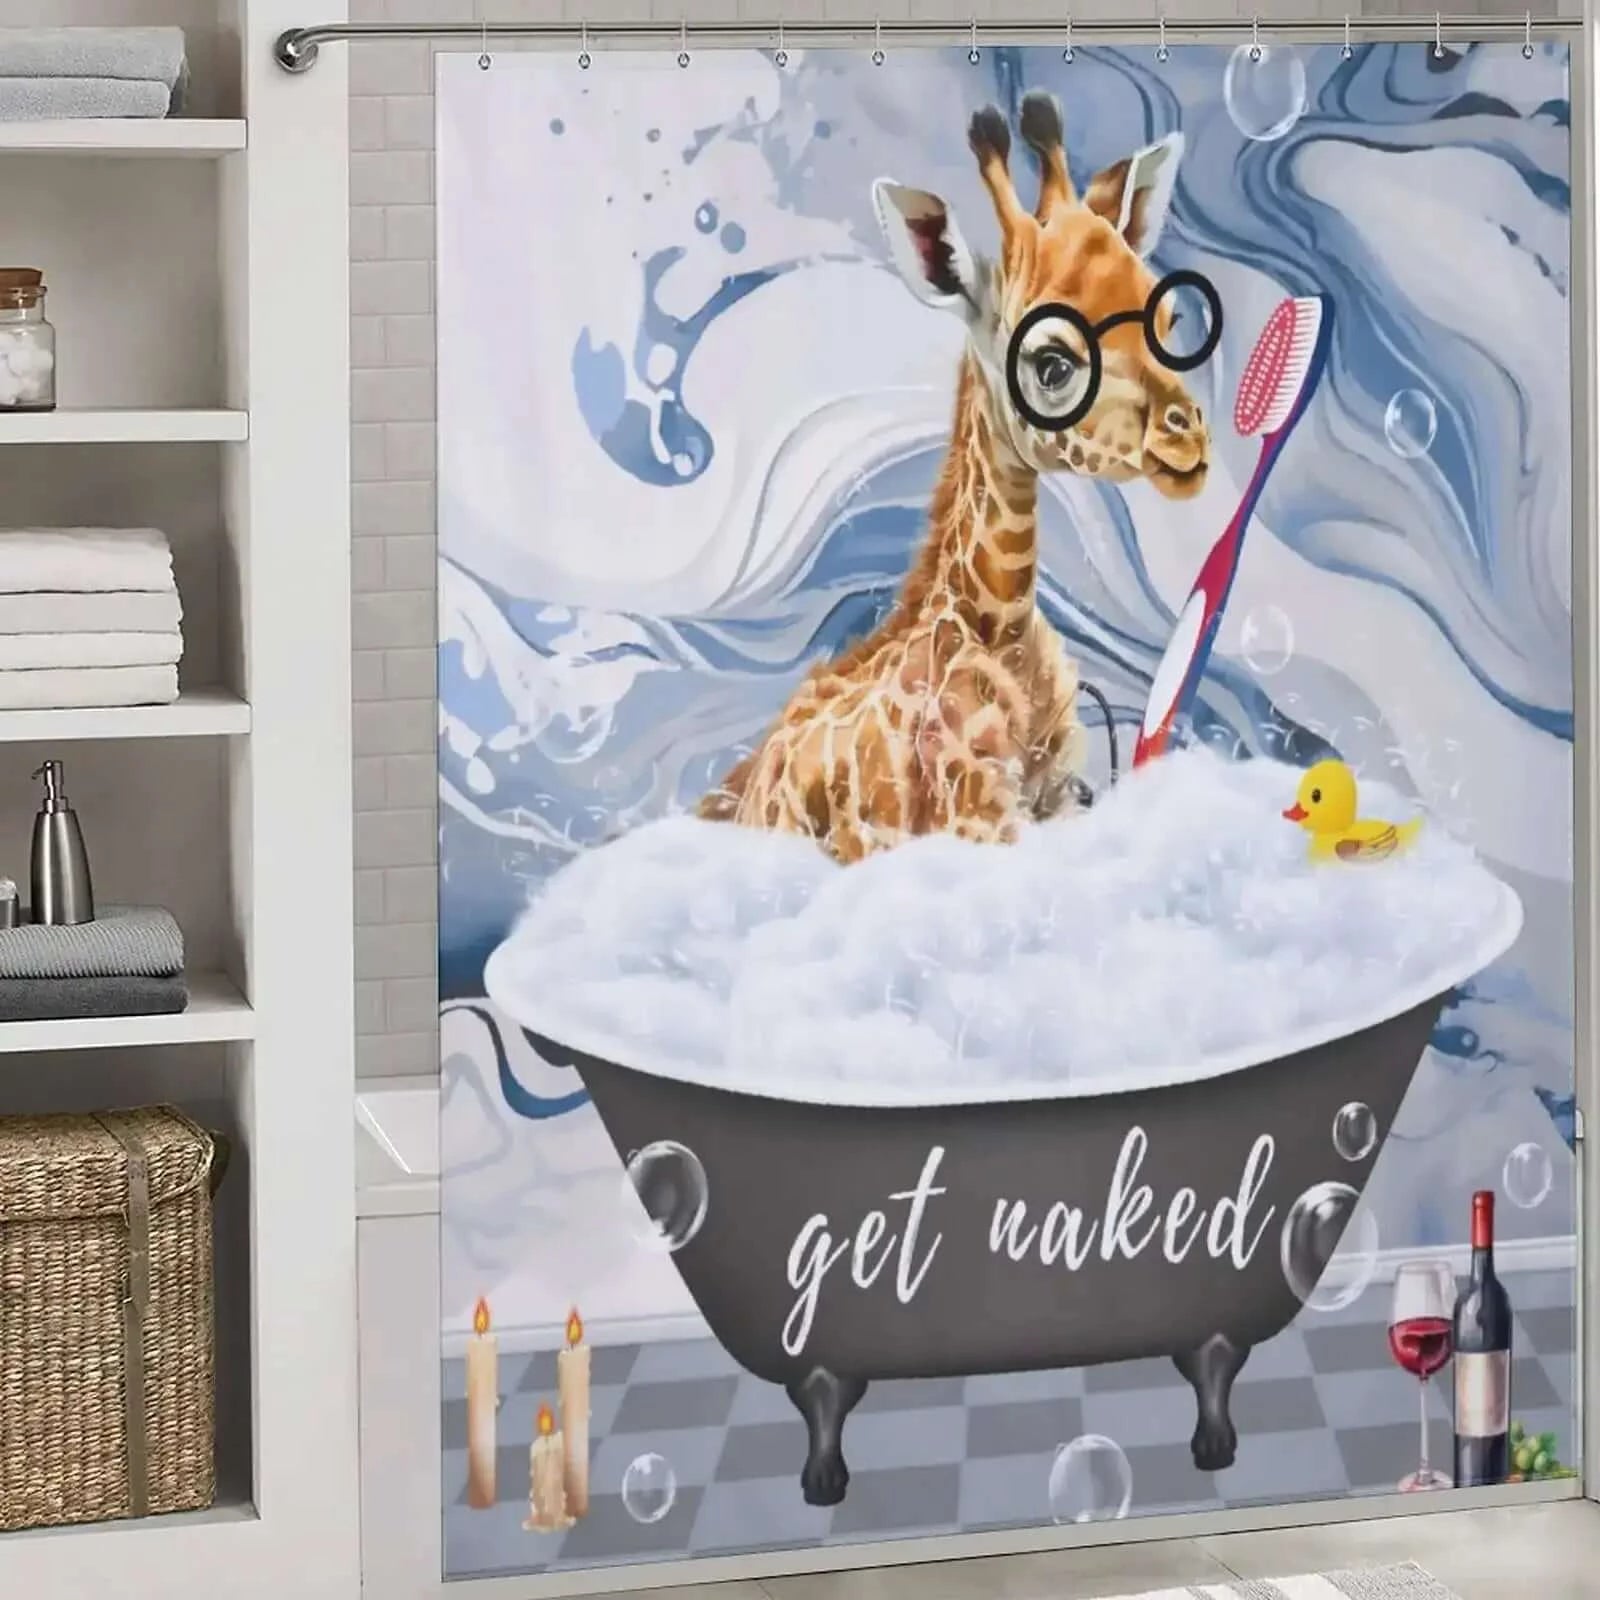 A Funny Giraffe Shower Curtain-Cottoncat is taking a bath in a bathroom tub.